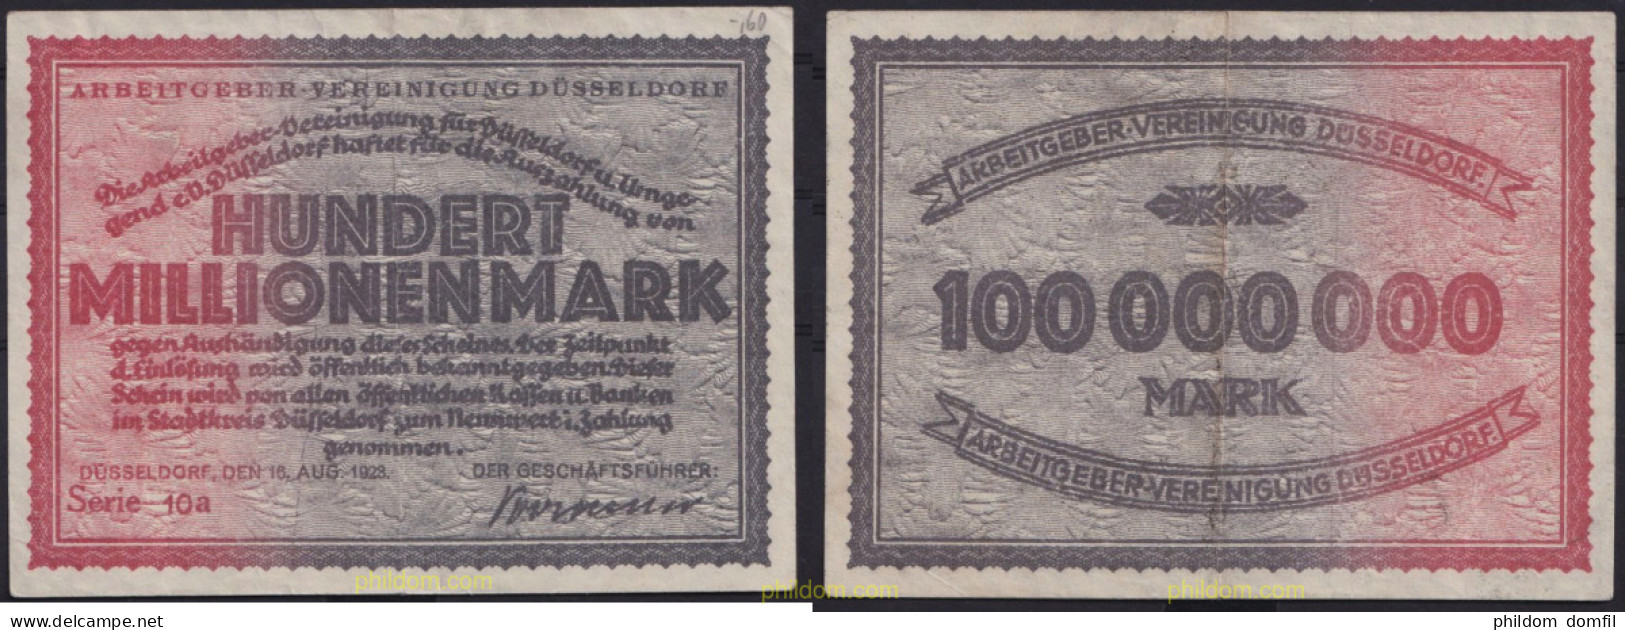 3691 ALEMANIA 1923 GERMANY HUNDERT MILLIONEN MARK DUSSELDORF 1923 - Administration De La Dette